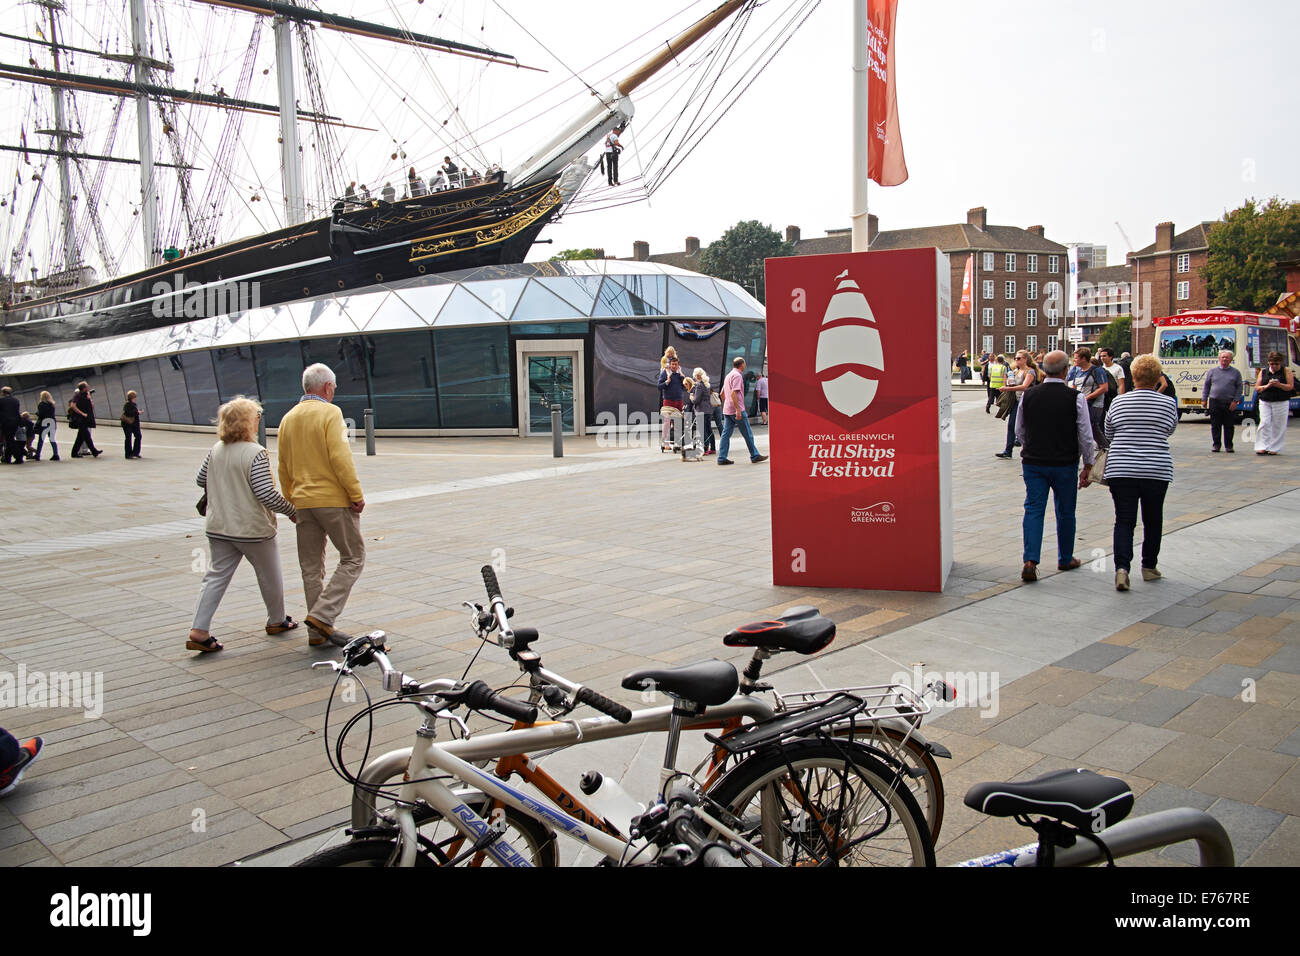 Greenwich, London - Advertising hoarding adshells around the Cutty Sark British clipper ship Stock Photo